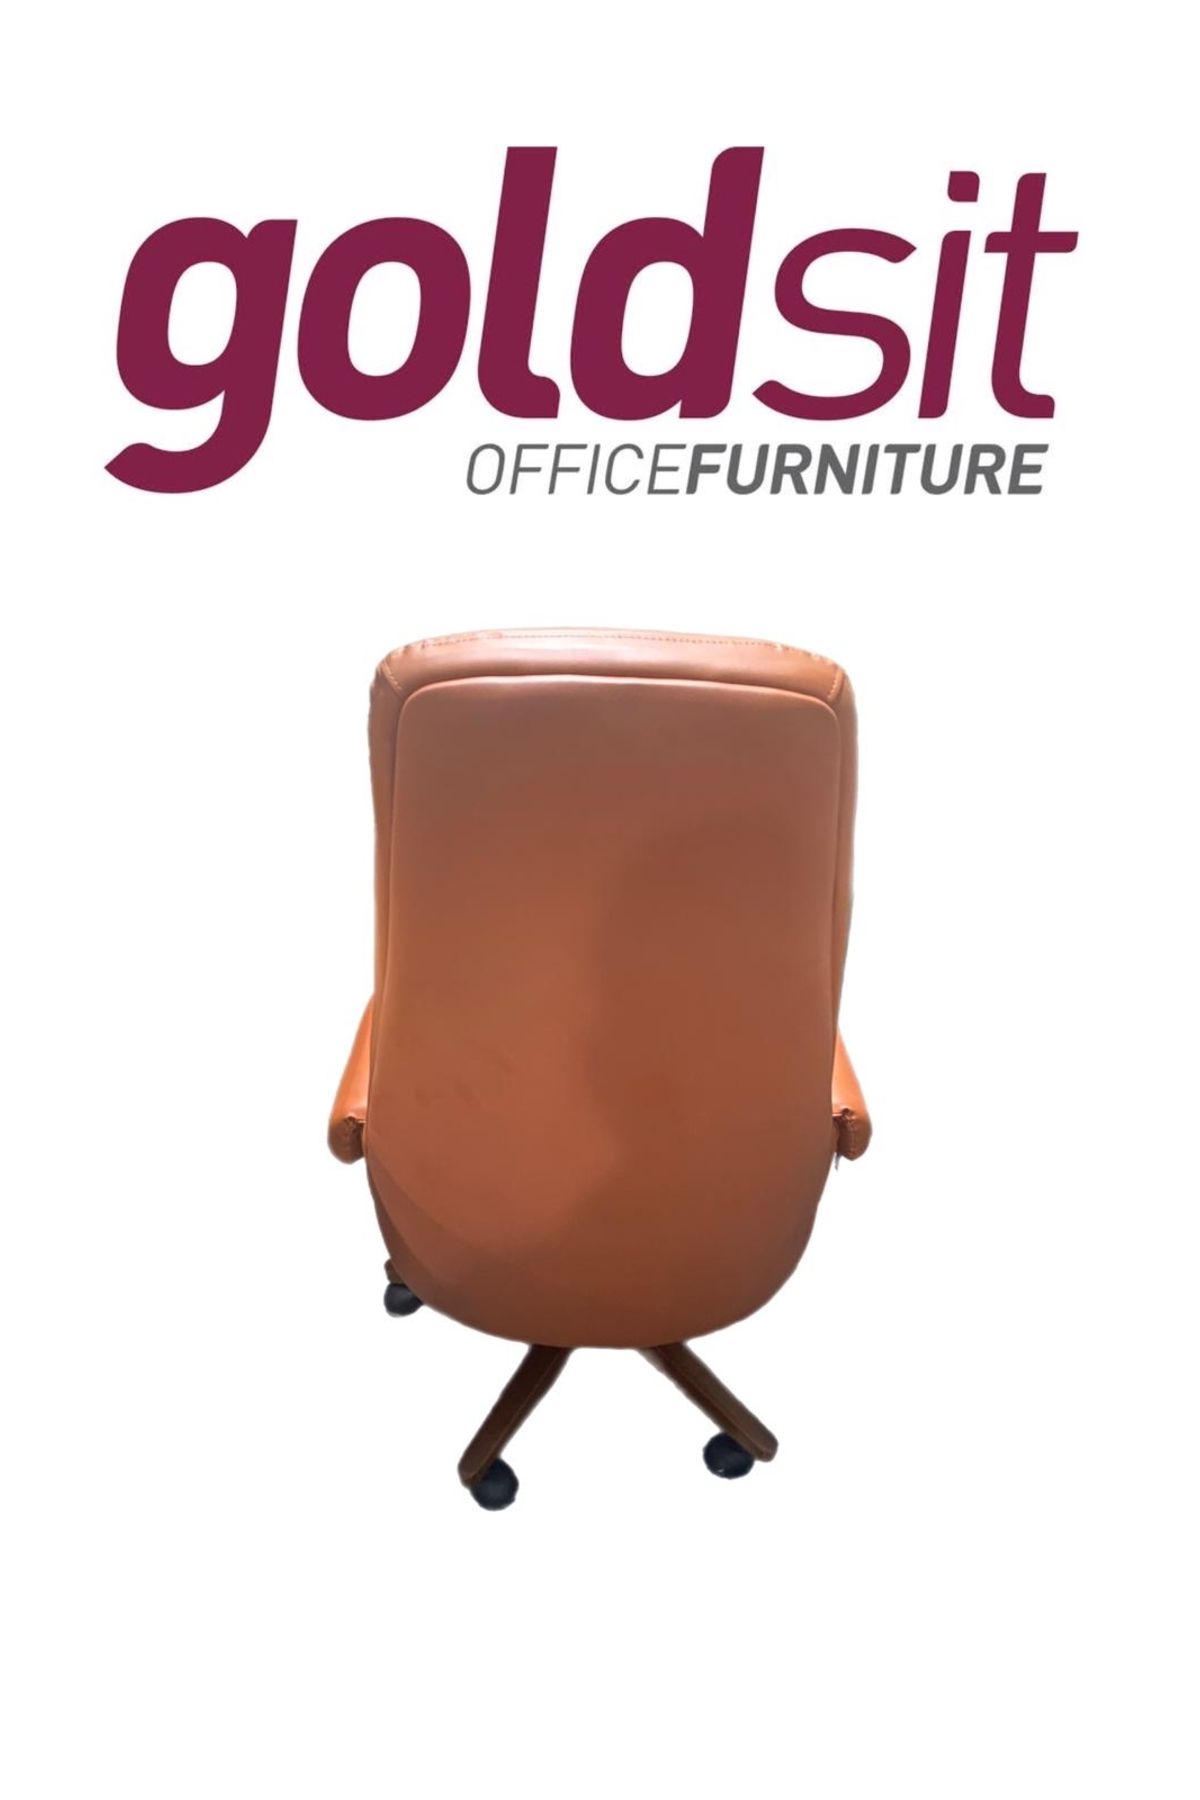 Goldsit Goldsit tarçın renk taba renk yönetici makam koltuğu